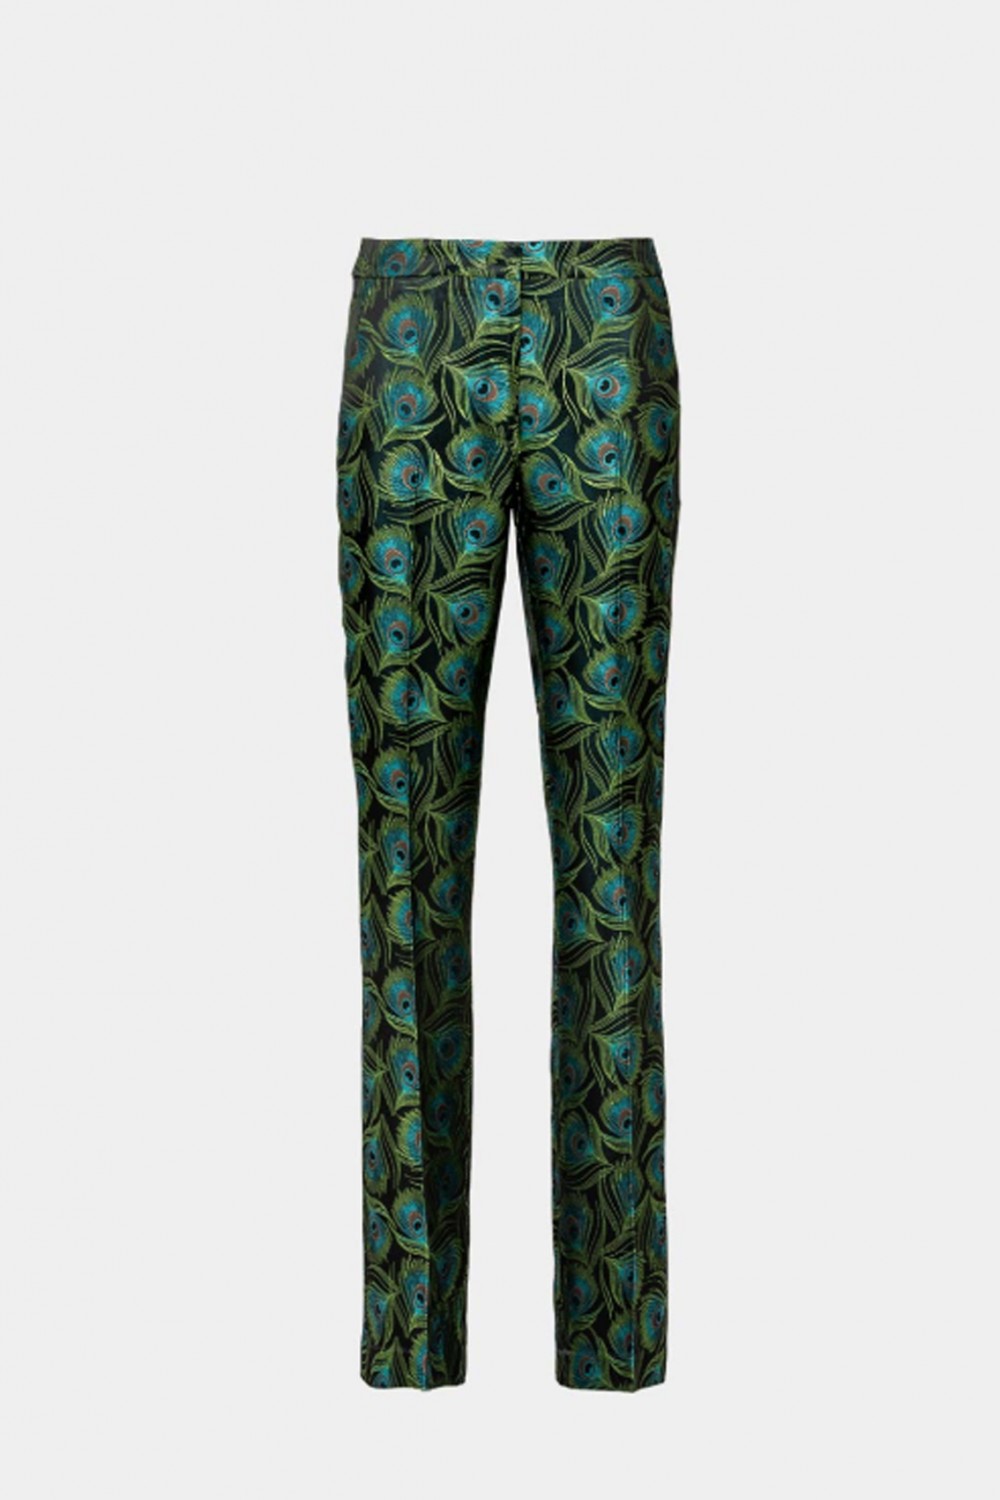 Peacock print trousers